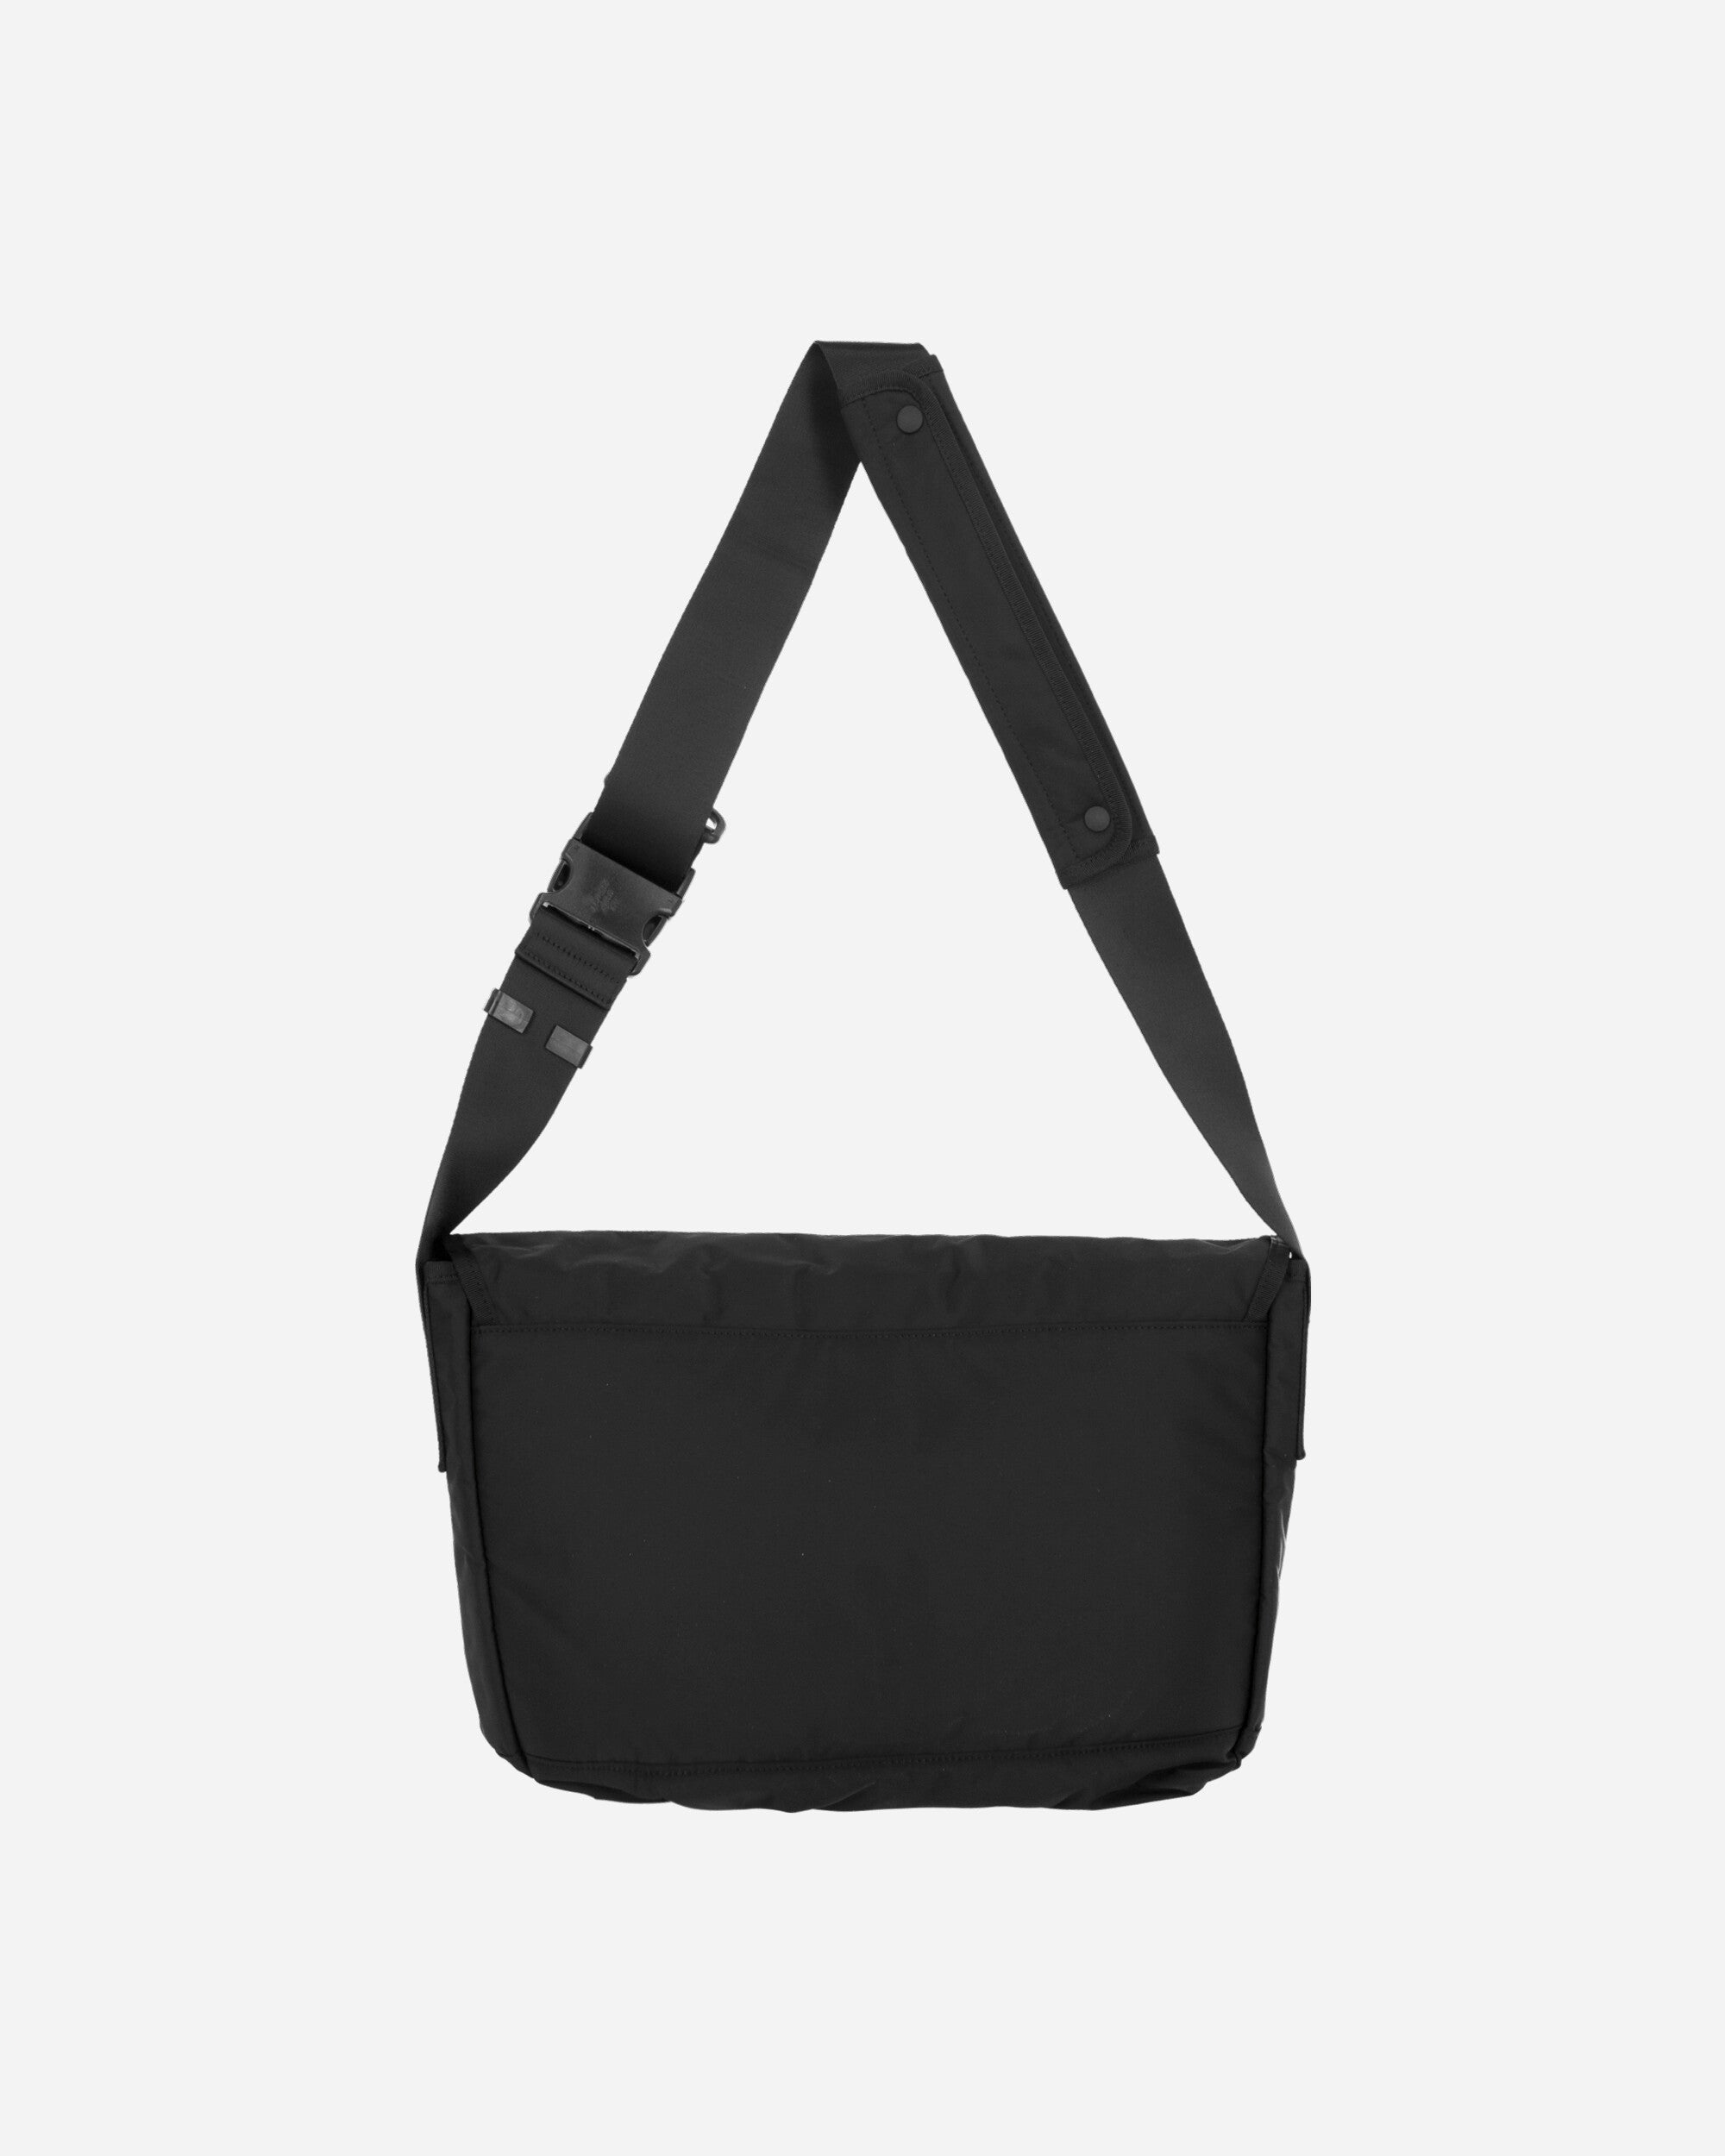 Ramidus Messenger Bag Black Bags and Backpacks Shoulder Bags B011096 001